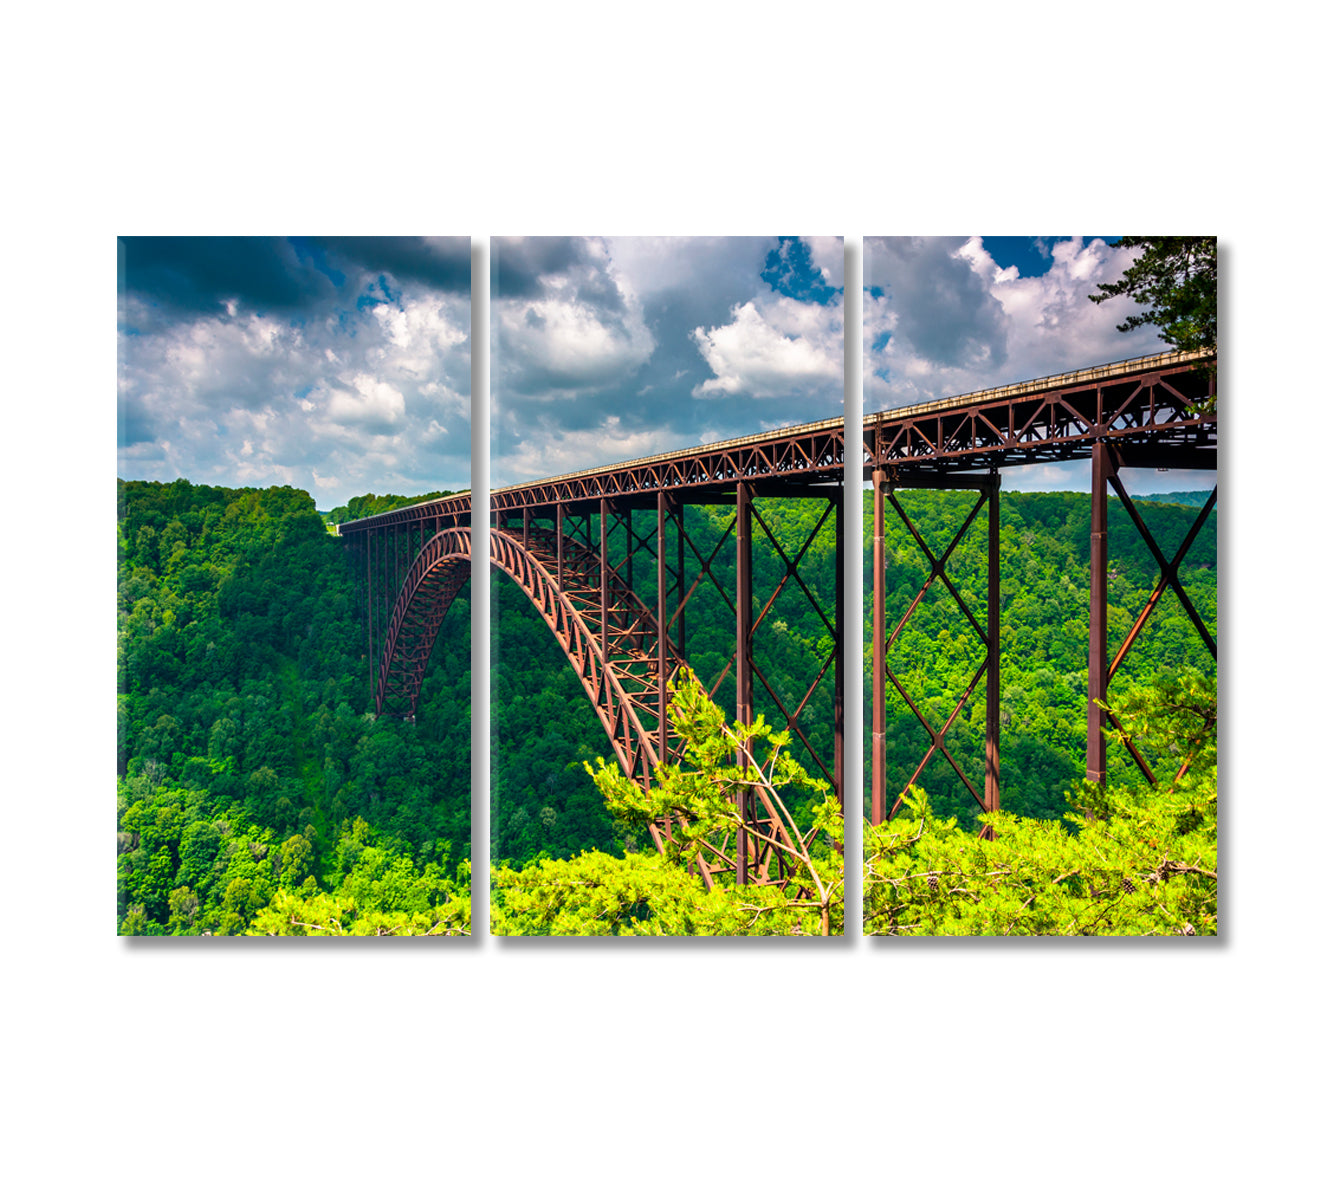 New River Gorge Bridge West Virginia Canvas Print-Canvas Print-CetArt-3 Panels-36x24 inches-CetArt